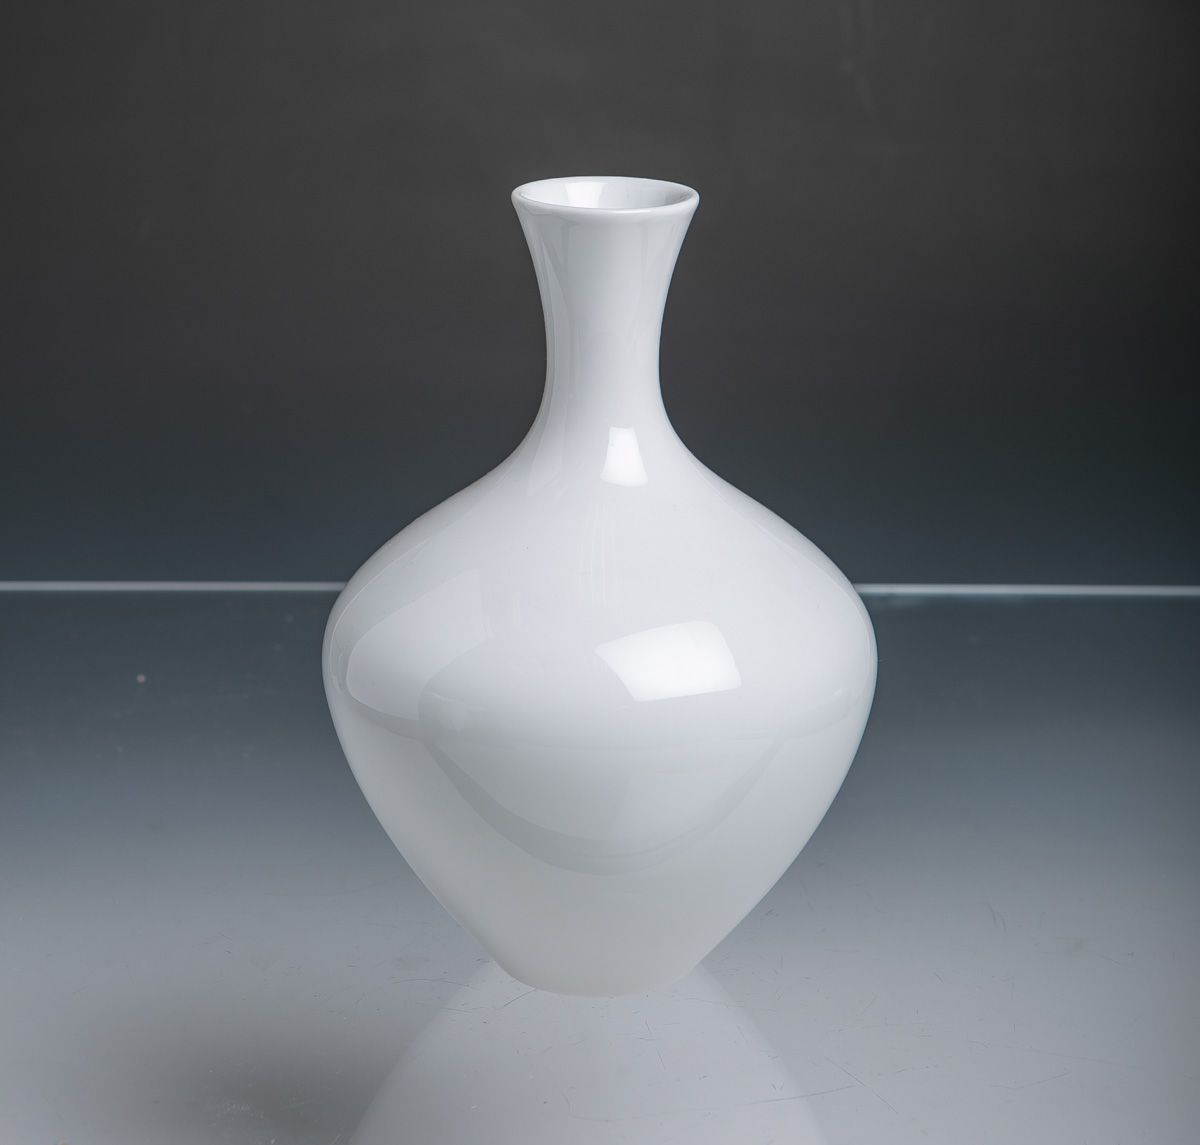 Null 花瓶(KPM Berlin)，白瓷，球状，窄颈向顶部扩大，高约21厘米。未损坏。